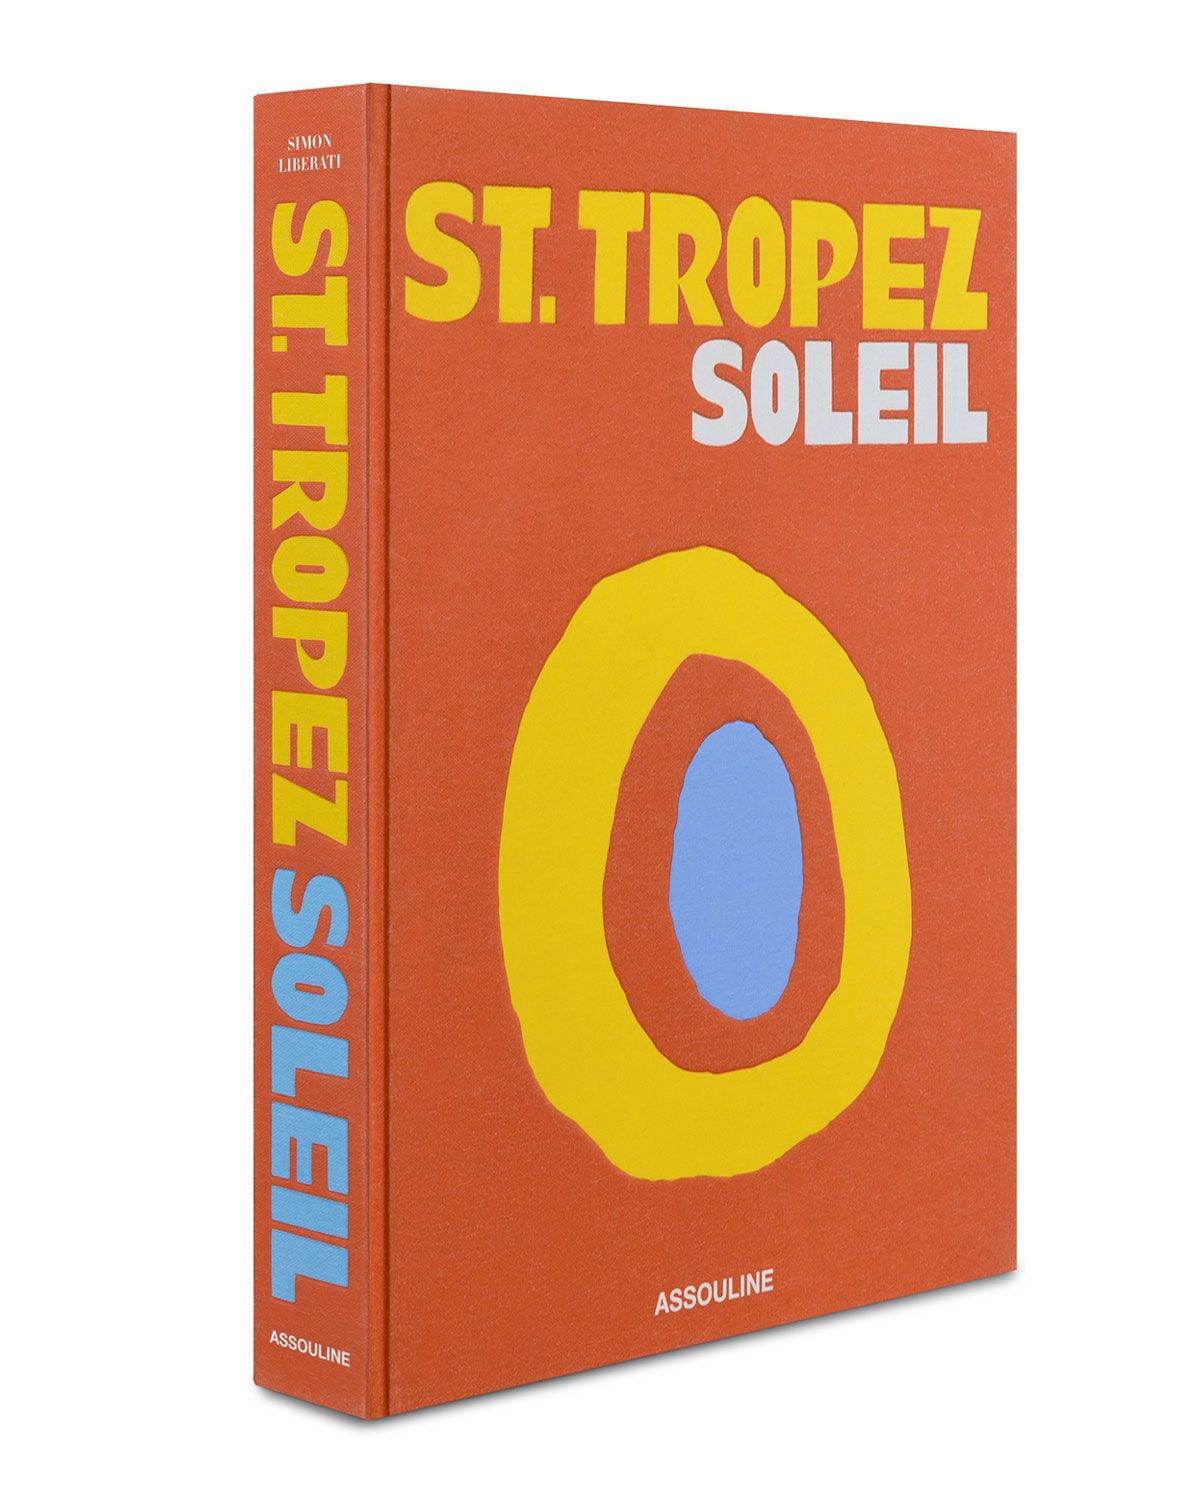 St. Tropez Soleil" Book | Bergdorf Goodman